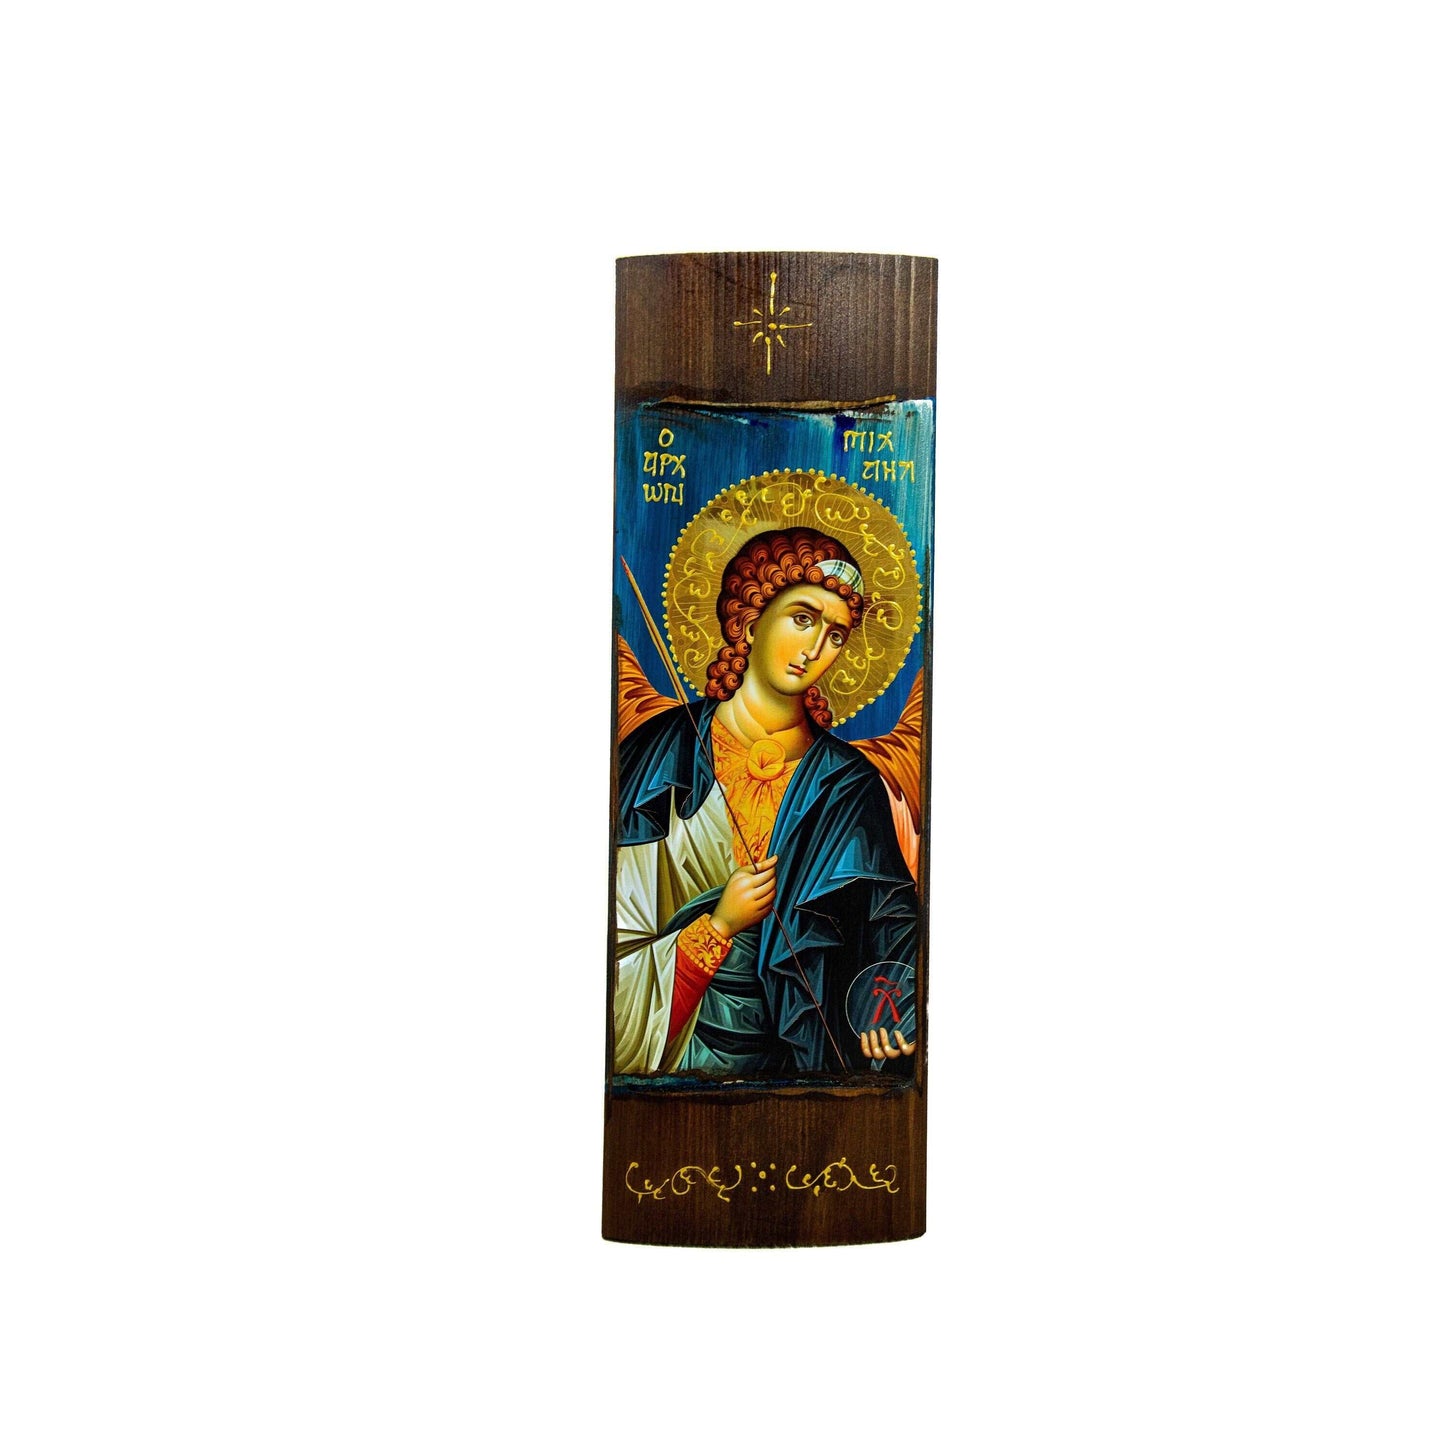 Archangel Michael icon, Handmade Greek Orthodox icon of St Michael, Byzantine art wall hanging on wood plaque icon, religious decor TheHolyArt